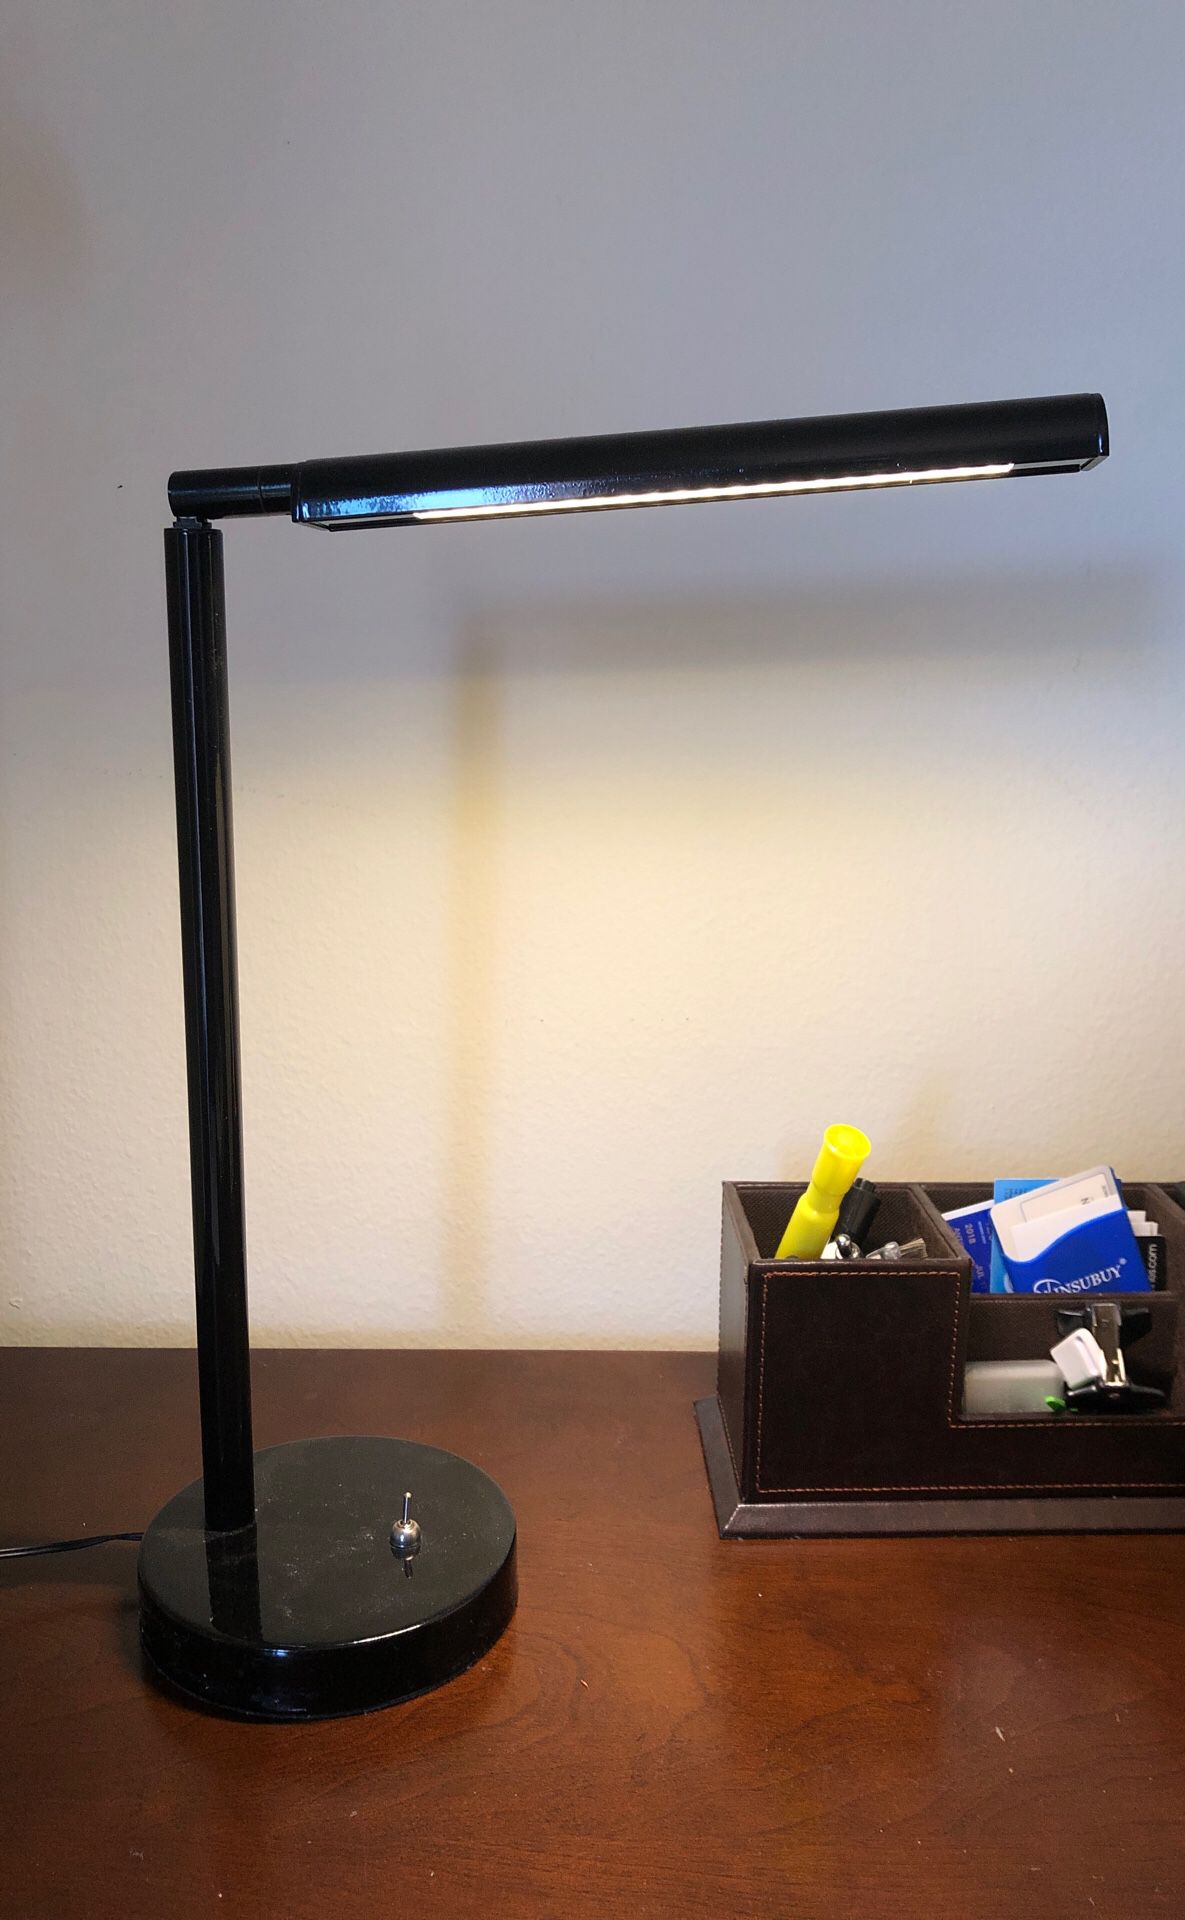 Elegant Desk Lamp